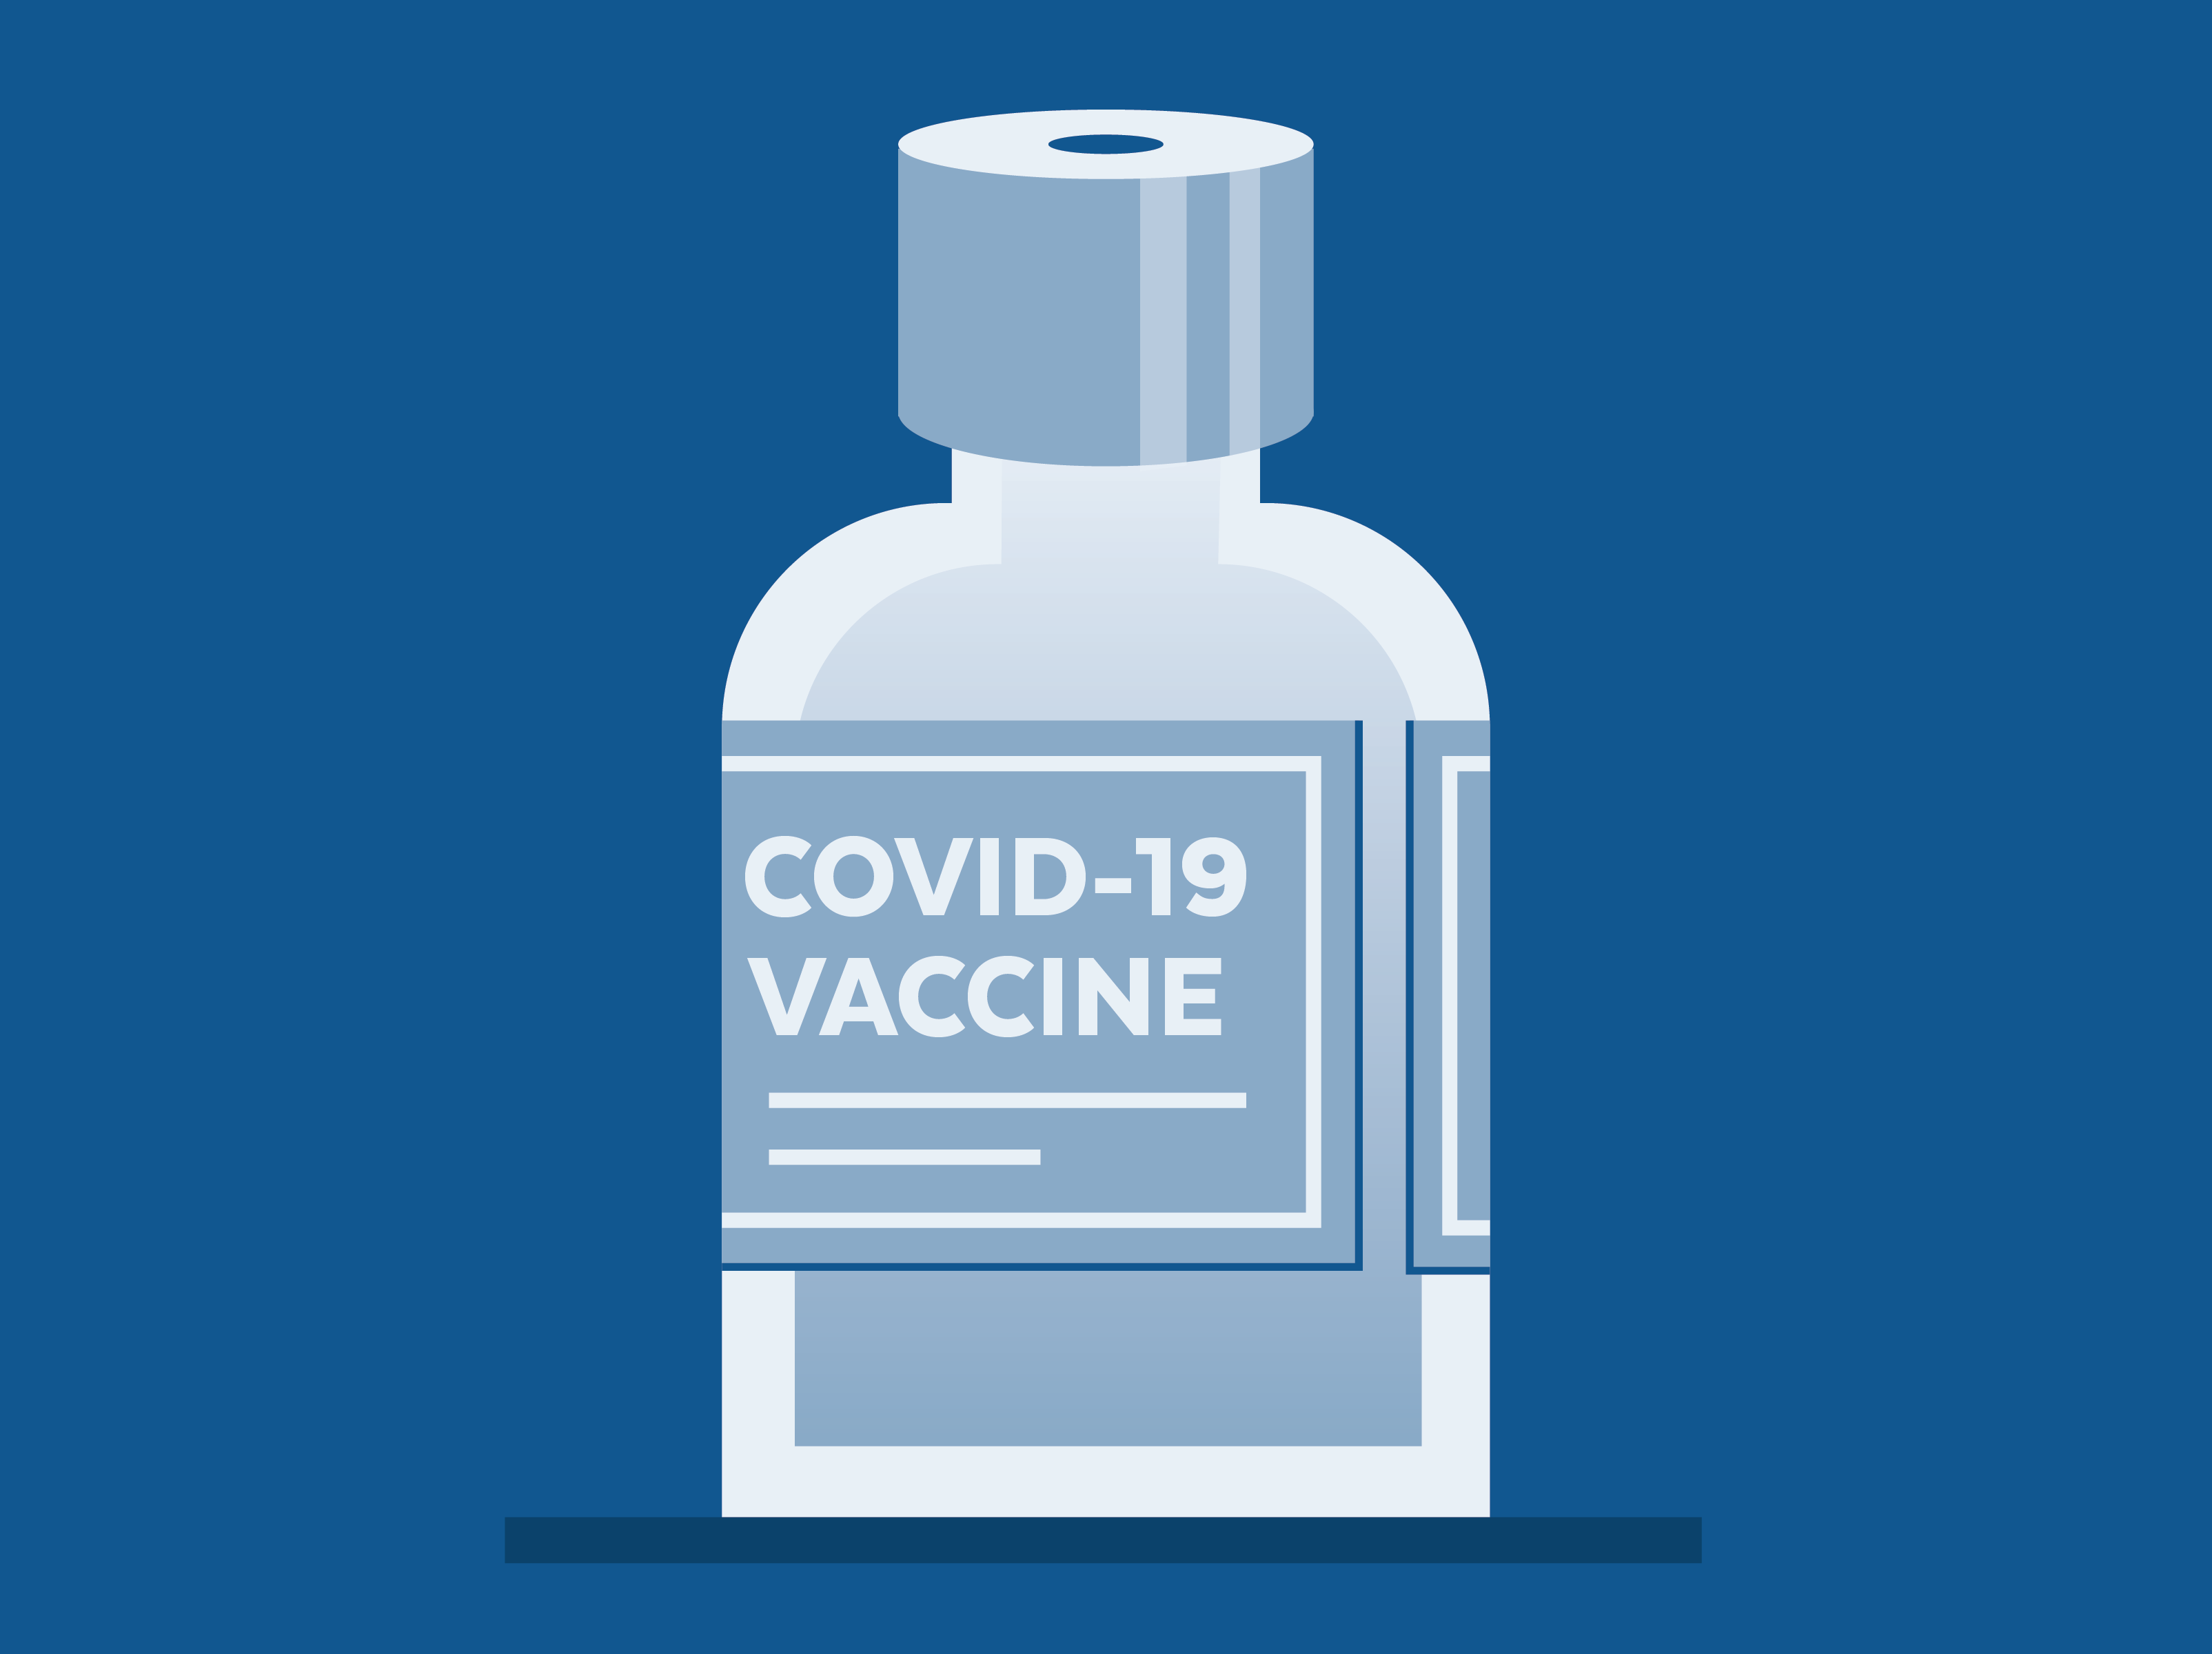 Where To Take Covid-19 Vaccine In Thanh Hoa? Address For Coronavirus Vaccinations In Vietnam